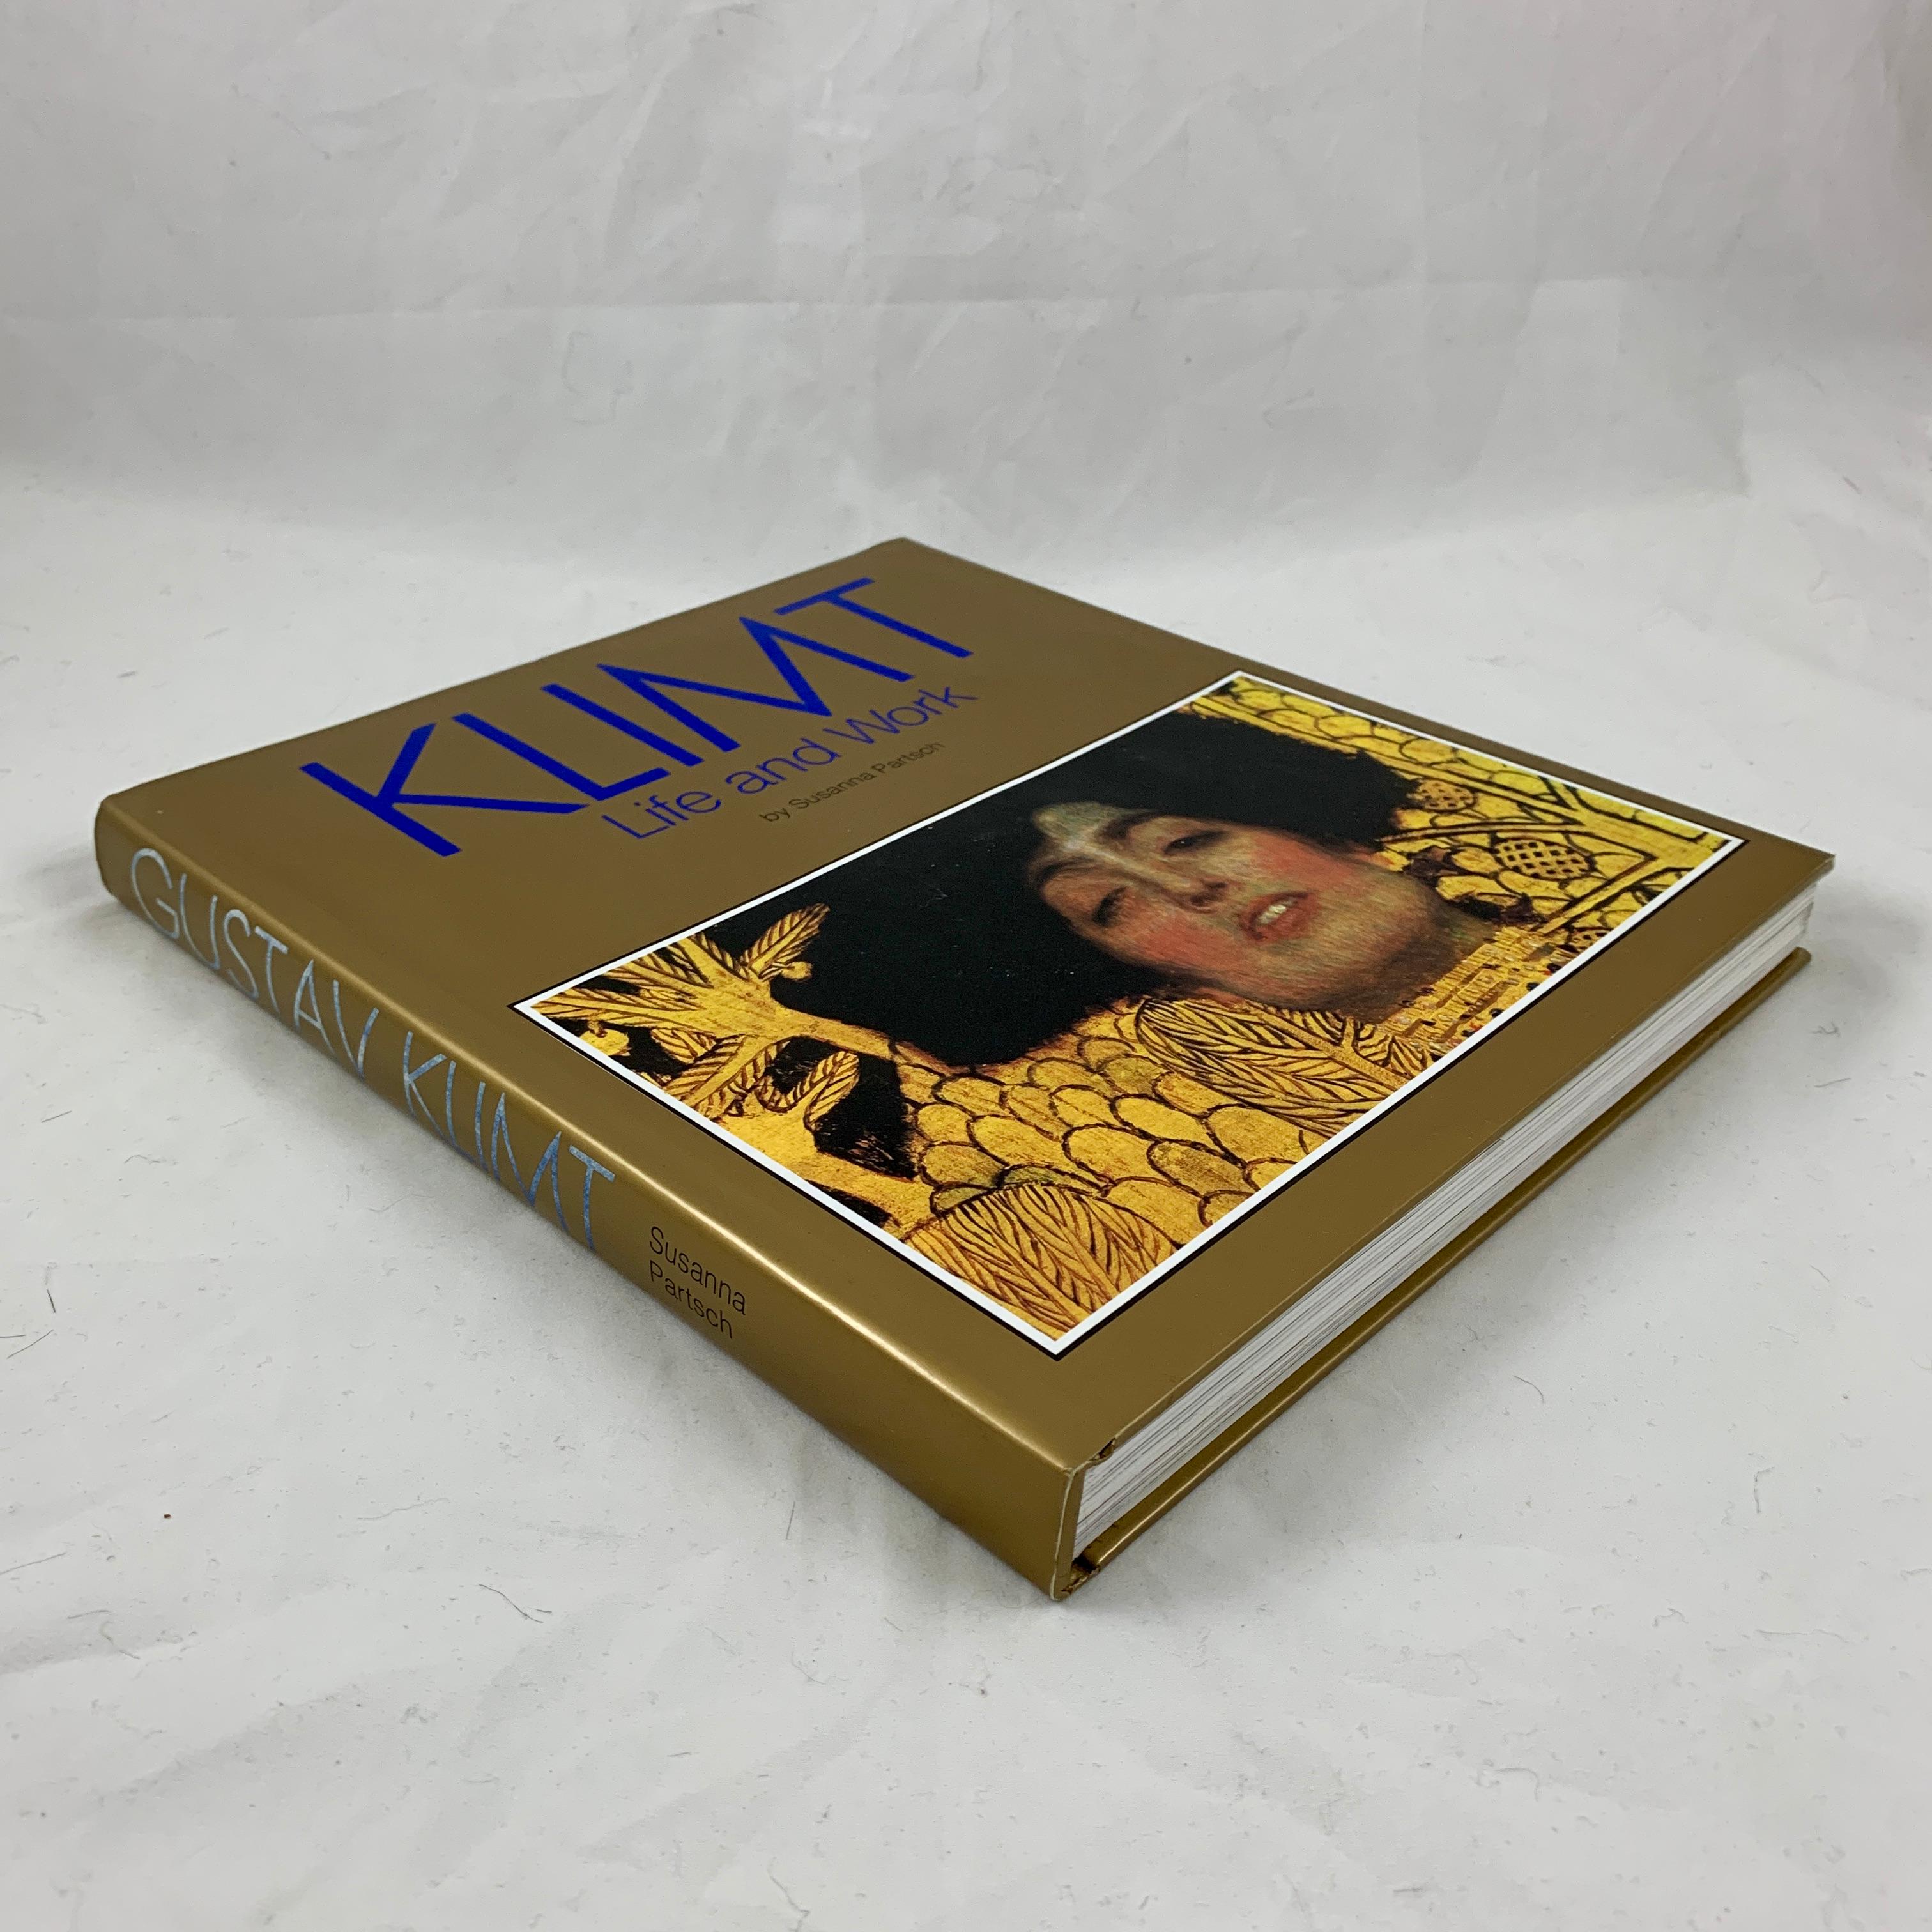 Contemporary Klimt Life and & Work Art Book by Susanna Partsch, 1st Edition, 2002